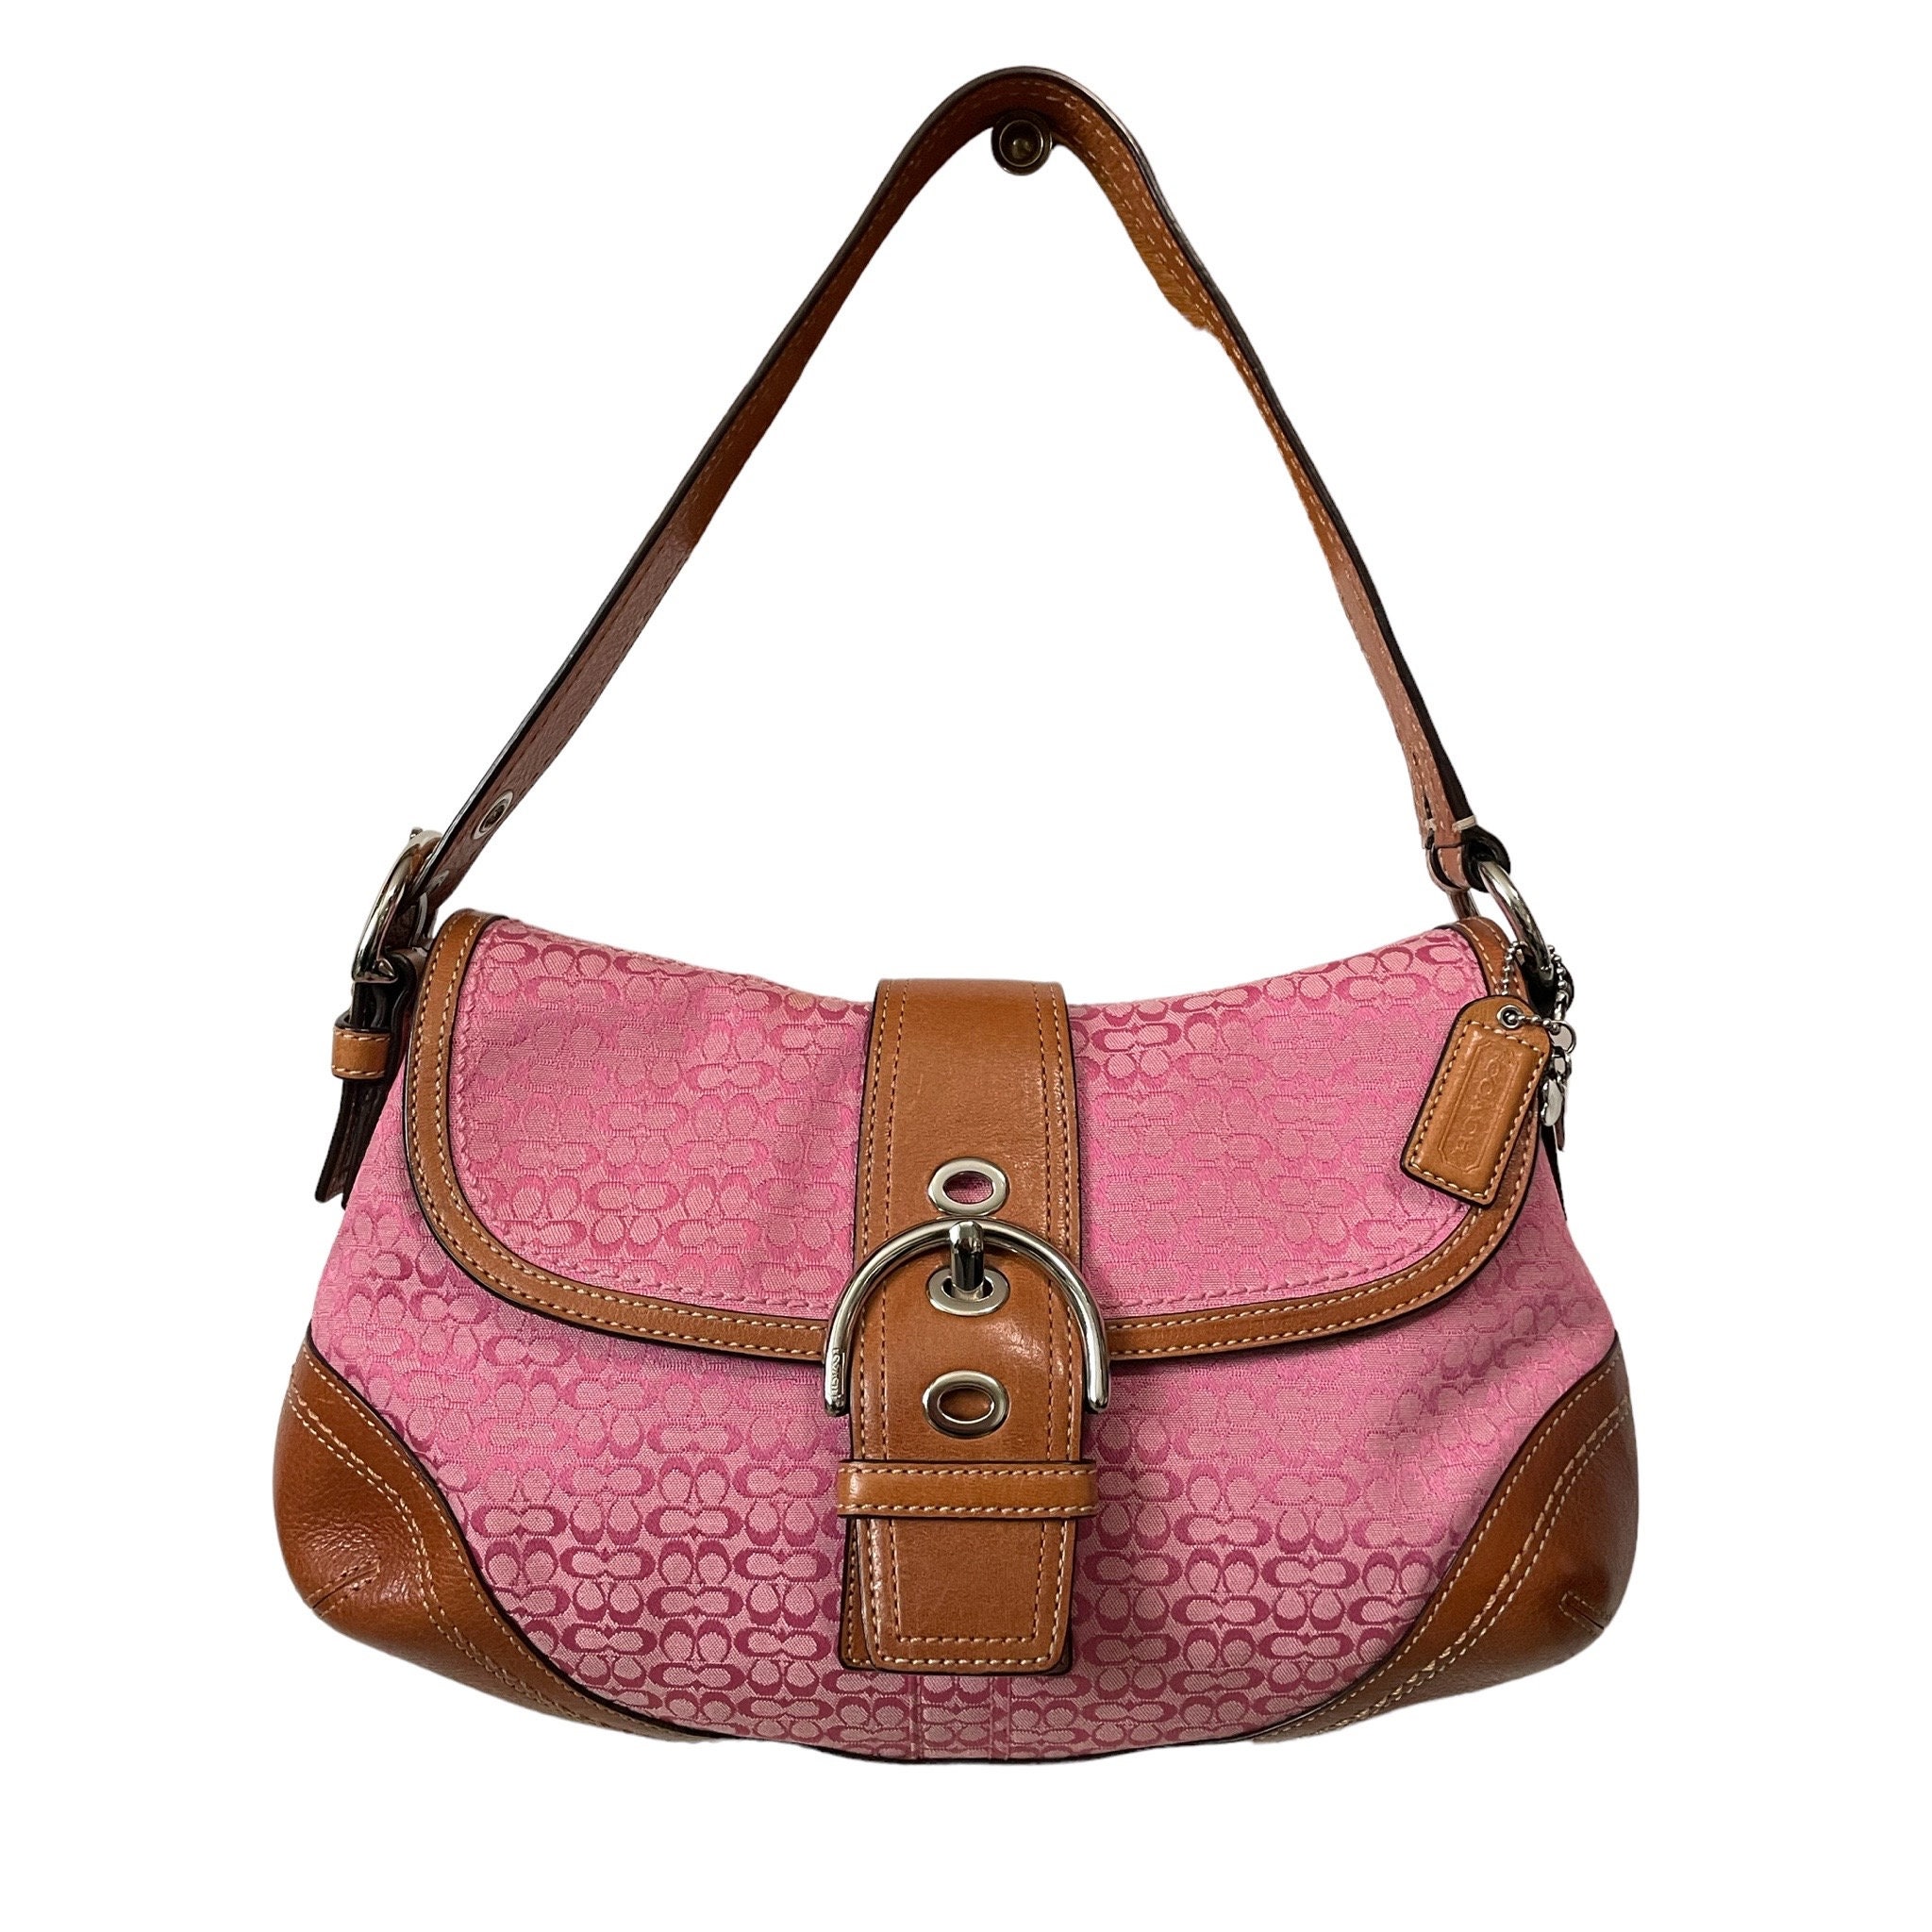 ❤️Vintage 90s COACH Monogram Hot Pink Handbag